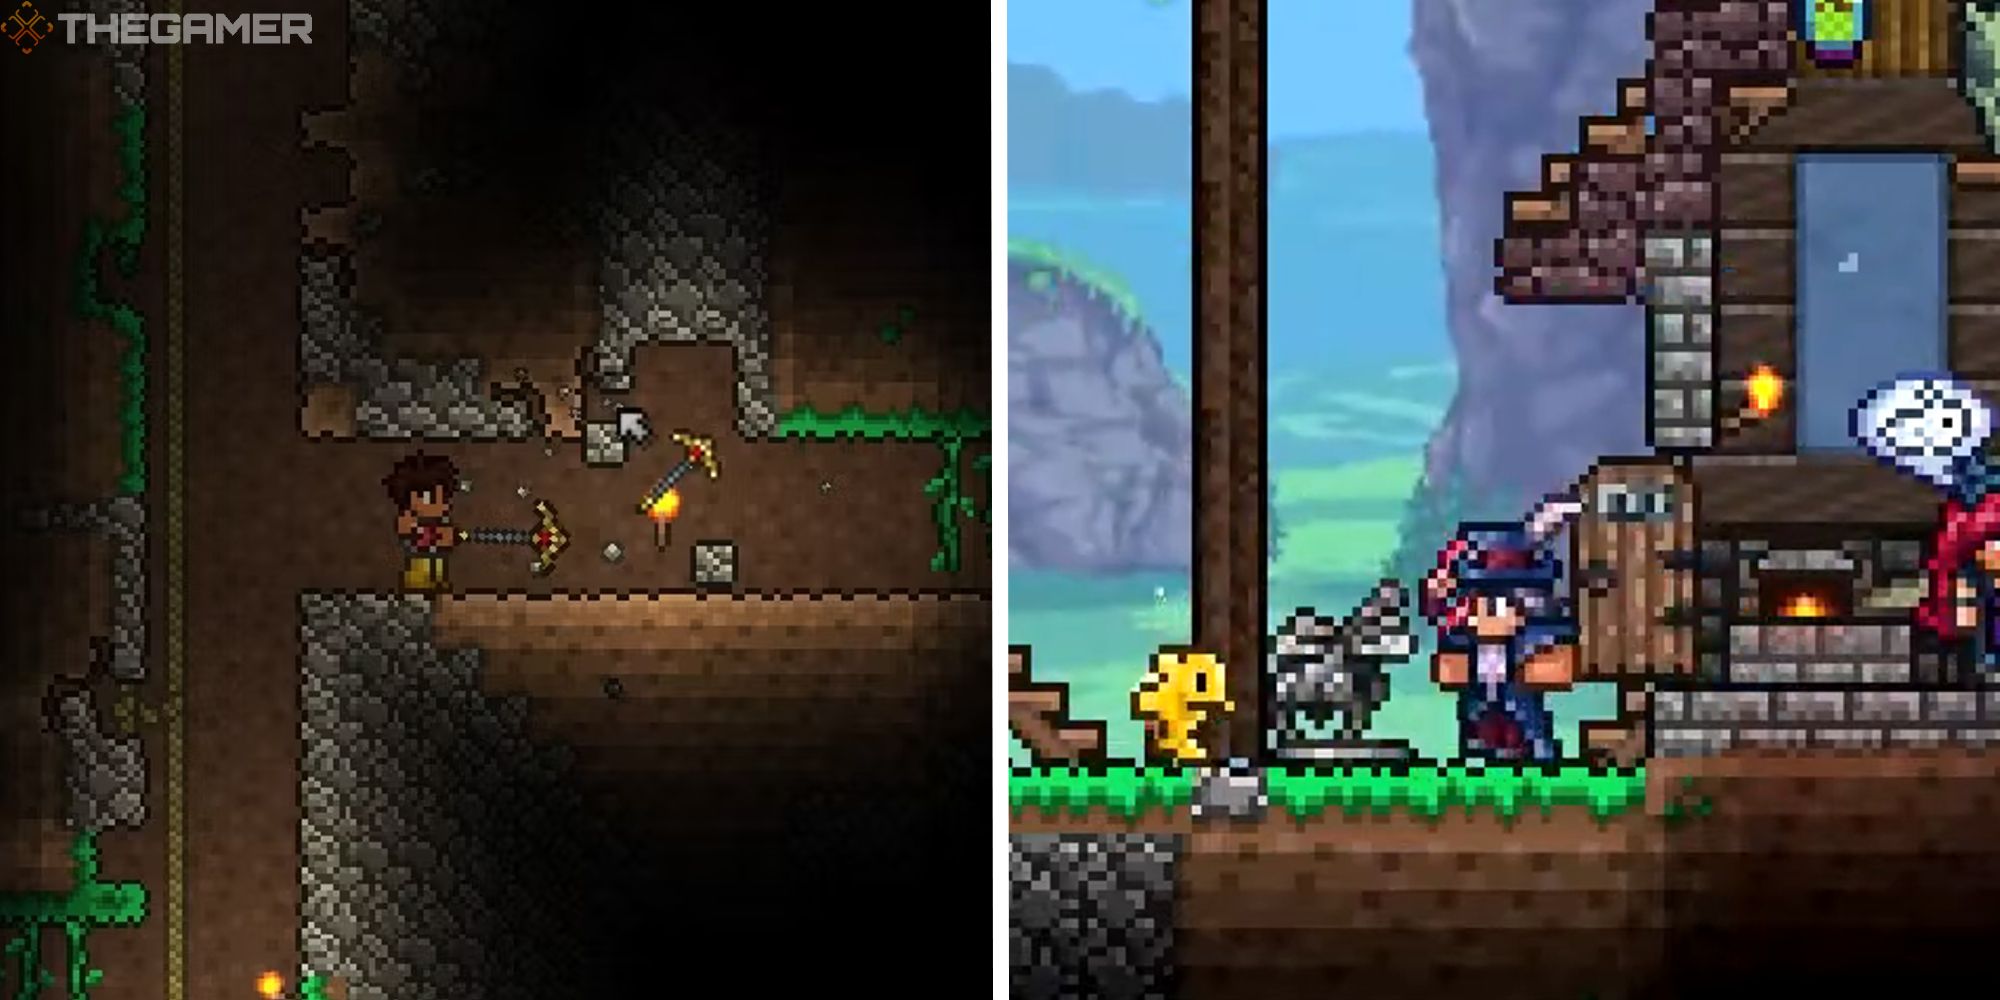 terraria split image showing player mining next to image of wandering trader